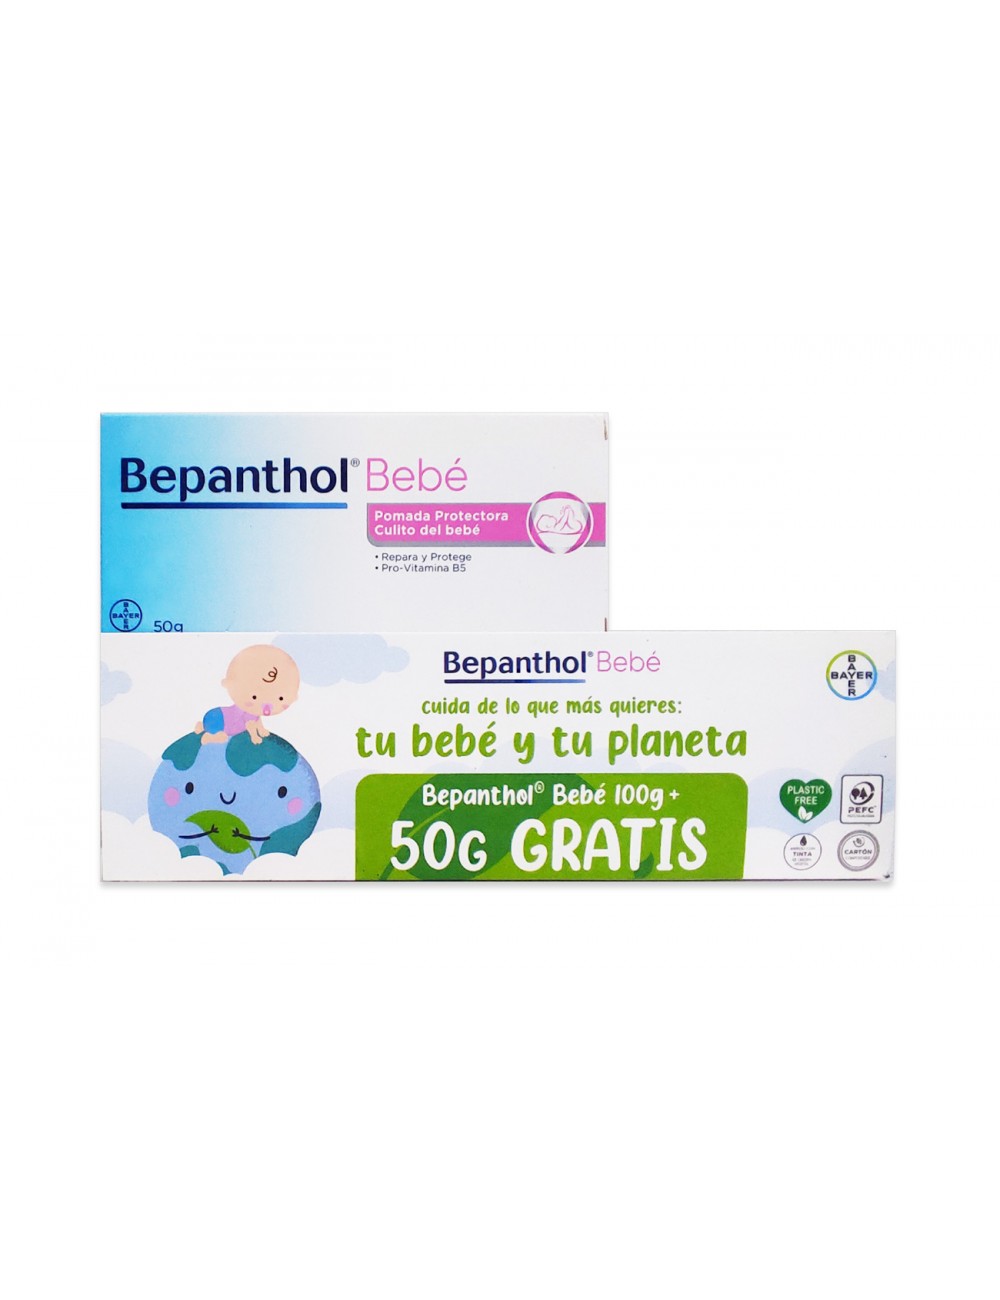 Bepanthol pomada protectora bebe duplo 2x100g - Farmacia en Casa Online